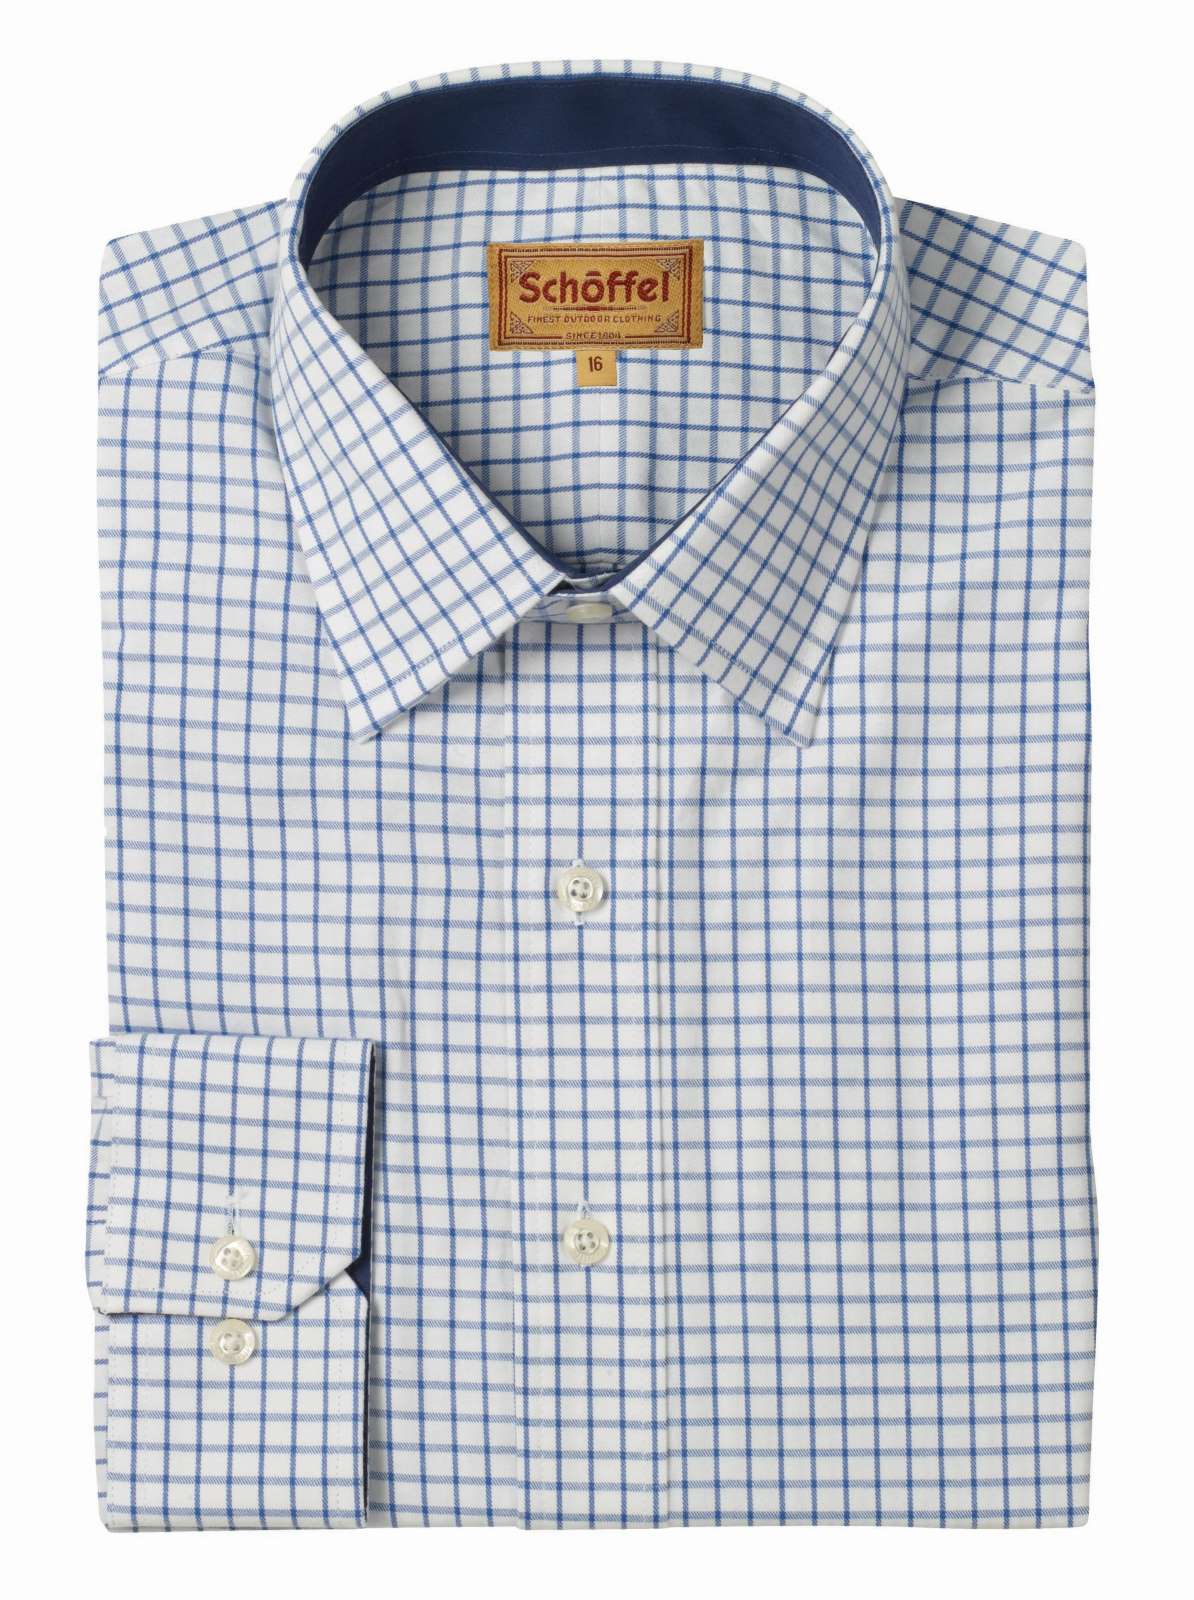 Schoffel Cambridge Classic Shirt Navy